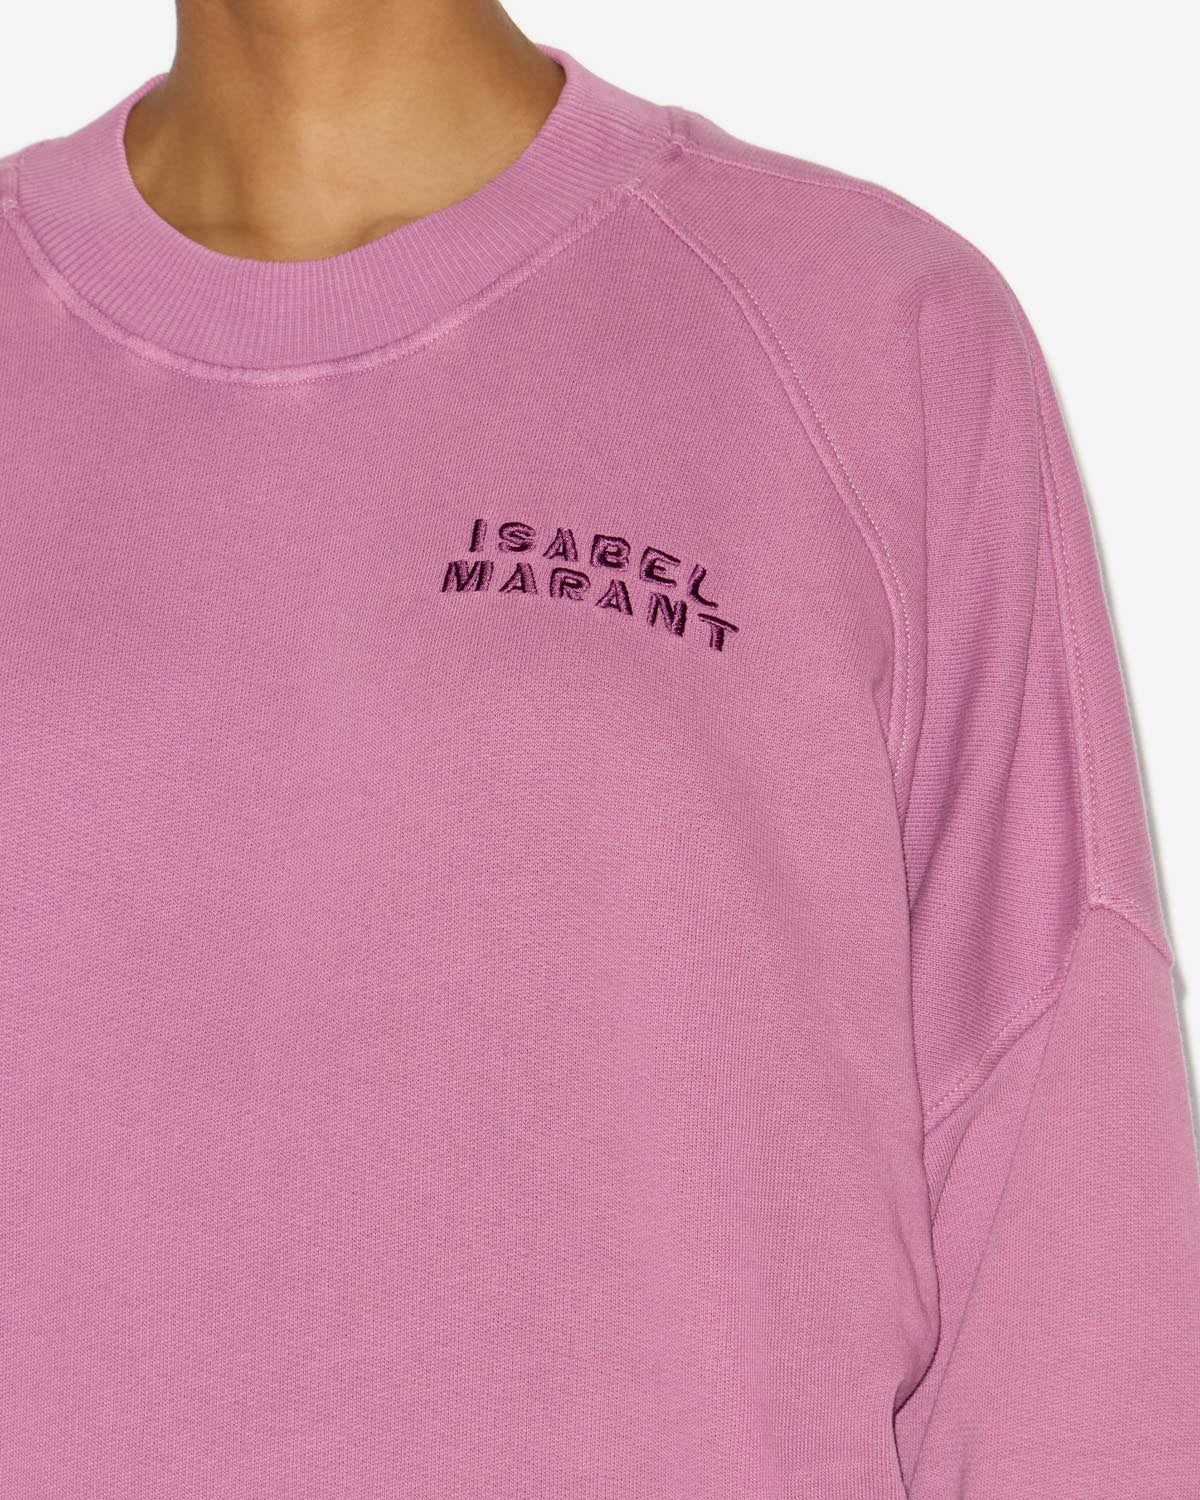 Shanice sweatshirt Woman Pink 2